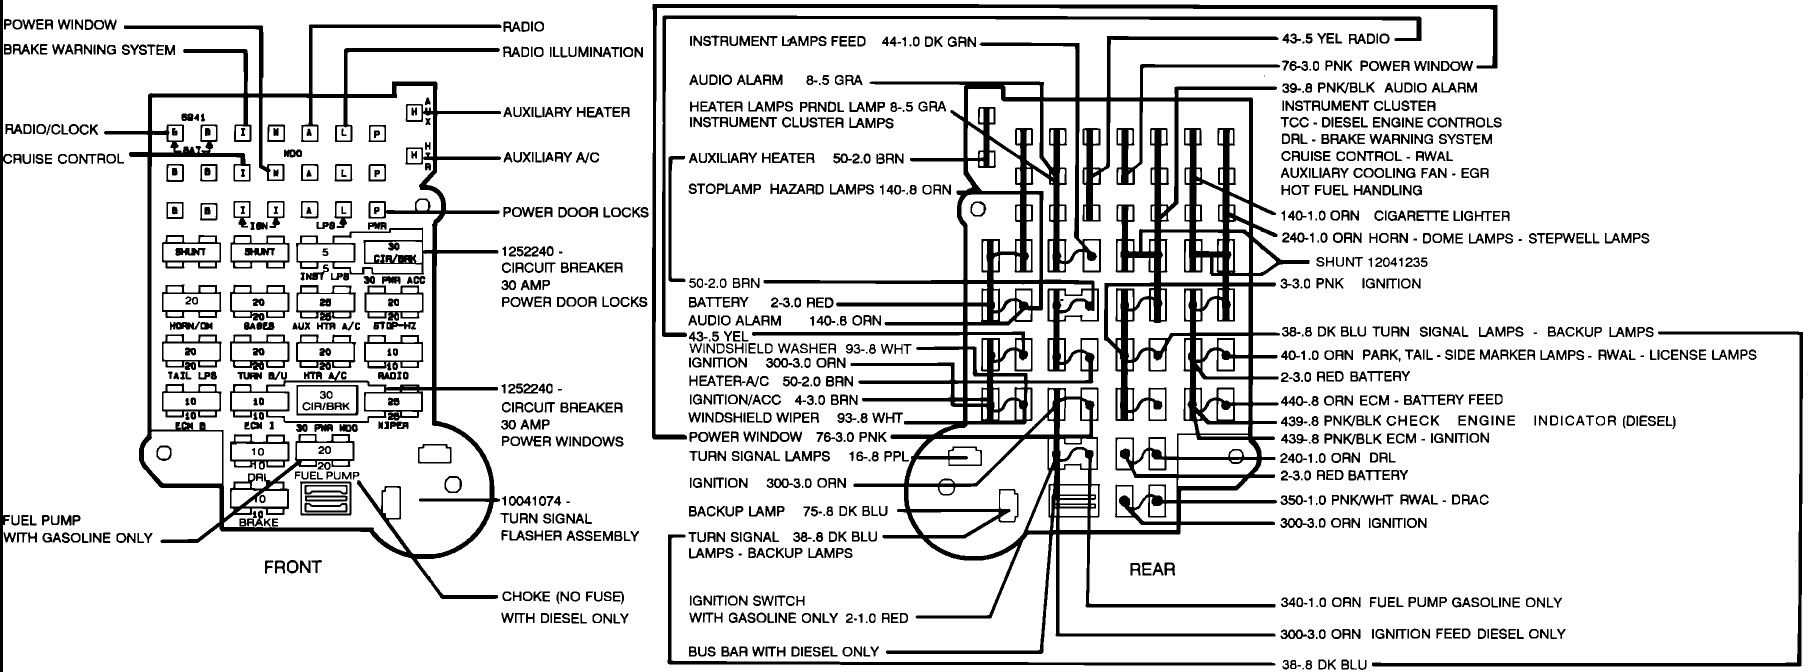 1978 GMC Fuse Box Wiring Diagram